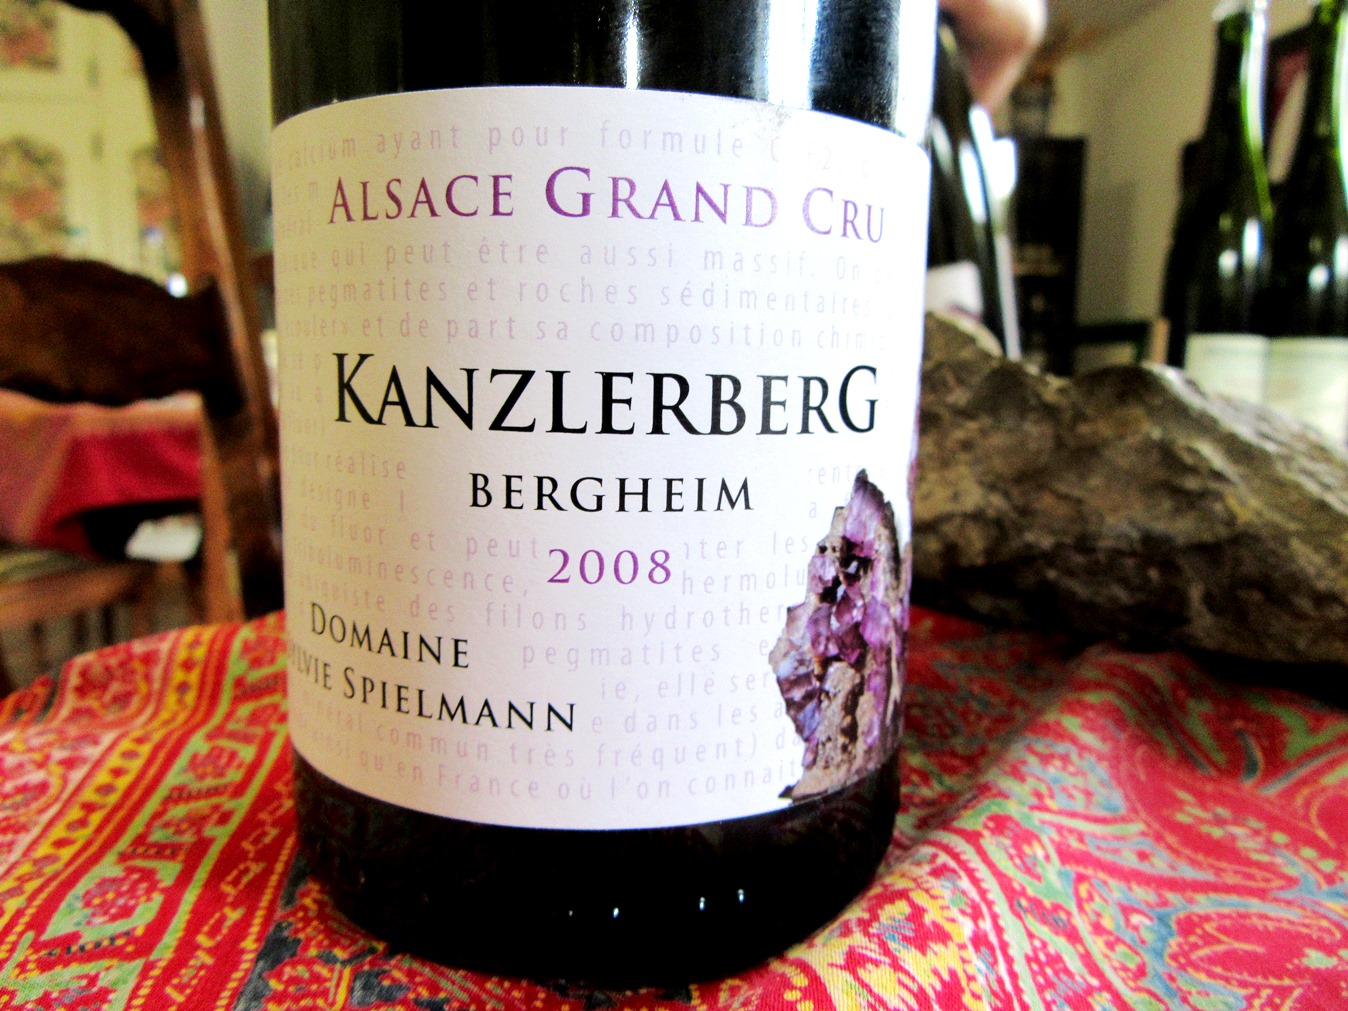 Domaine Sylvie Spielmann, Kanzlerberg Bergheim Riesling 2008, Bergheim, Alsace Grand Cru, France, Wine Casual